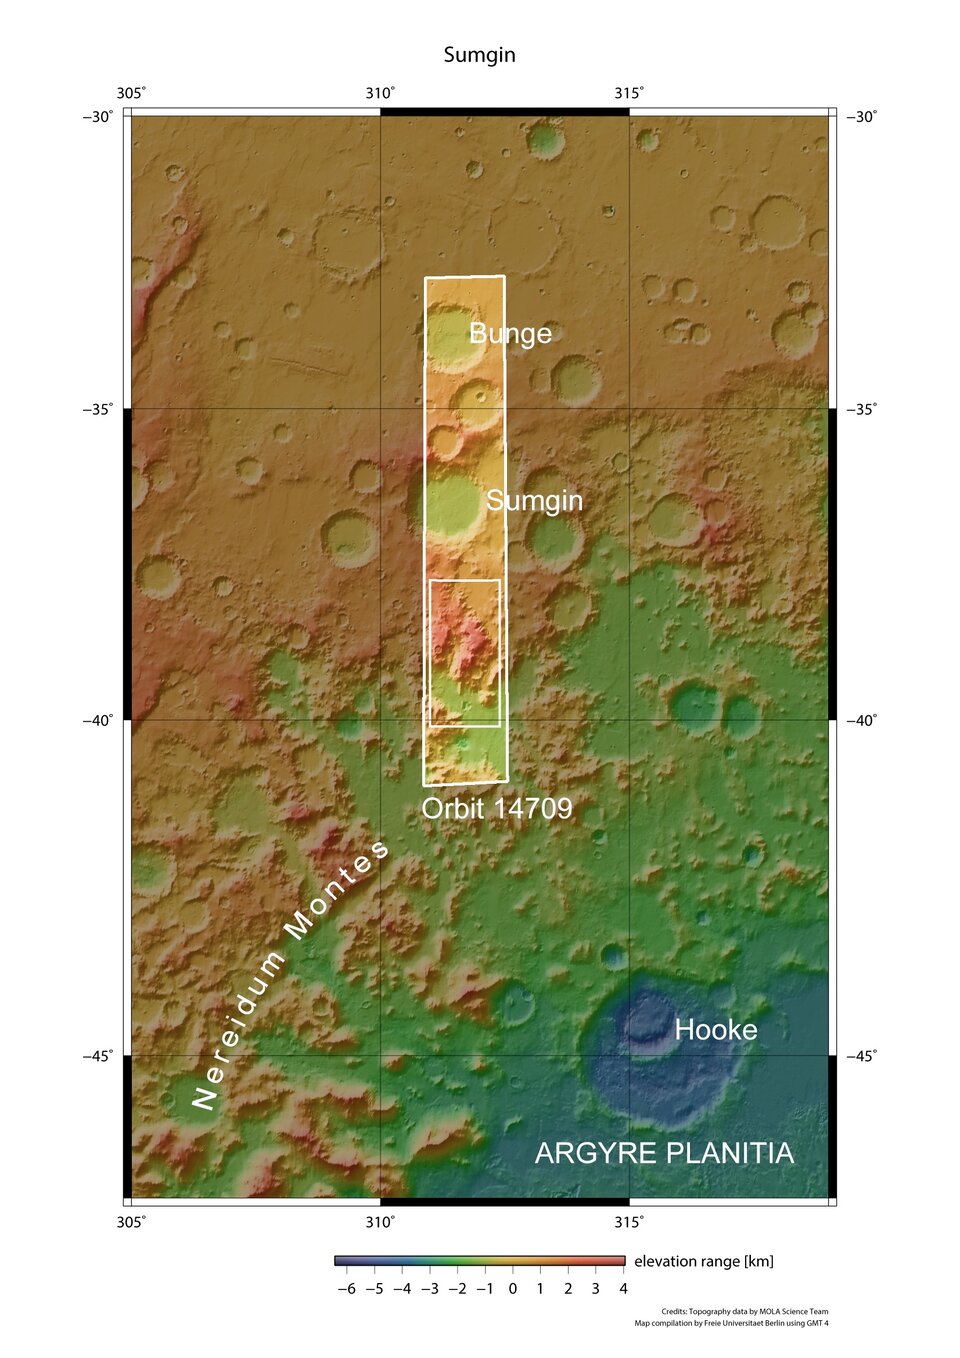 Reference image of Argyre impact basin on Mars